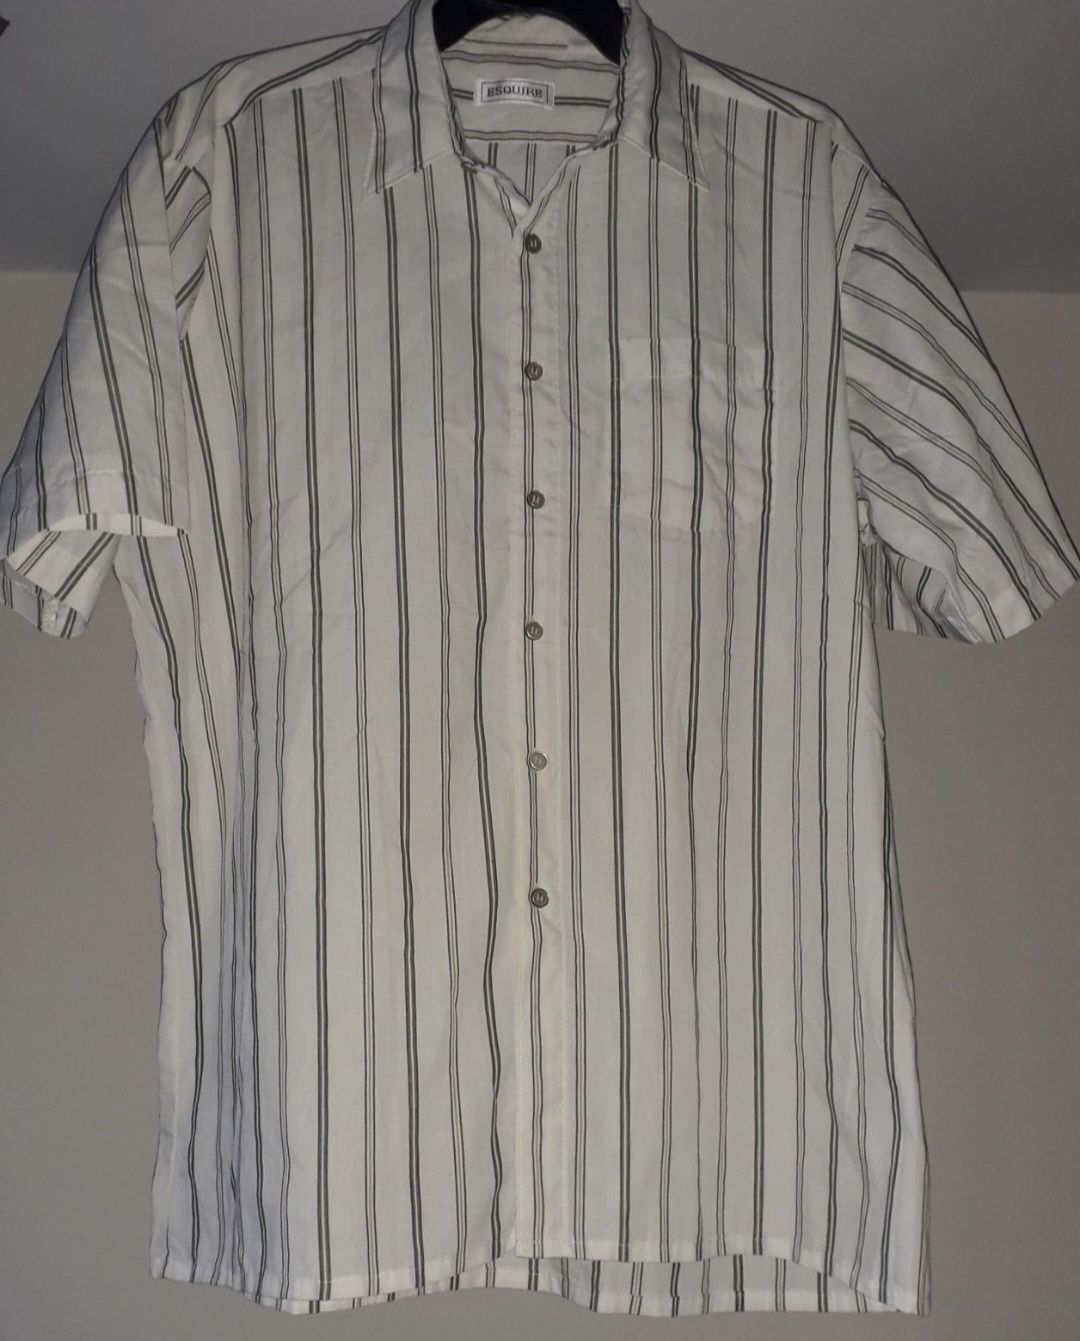 Koszula męska z krótkim rękawkiem XL